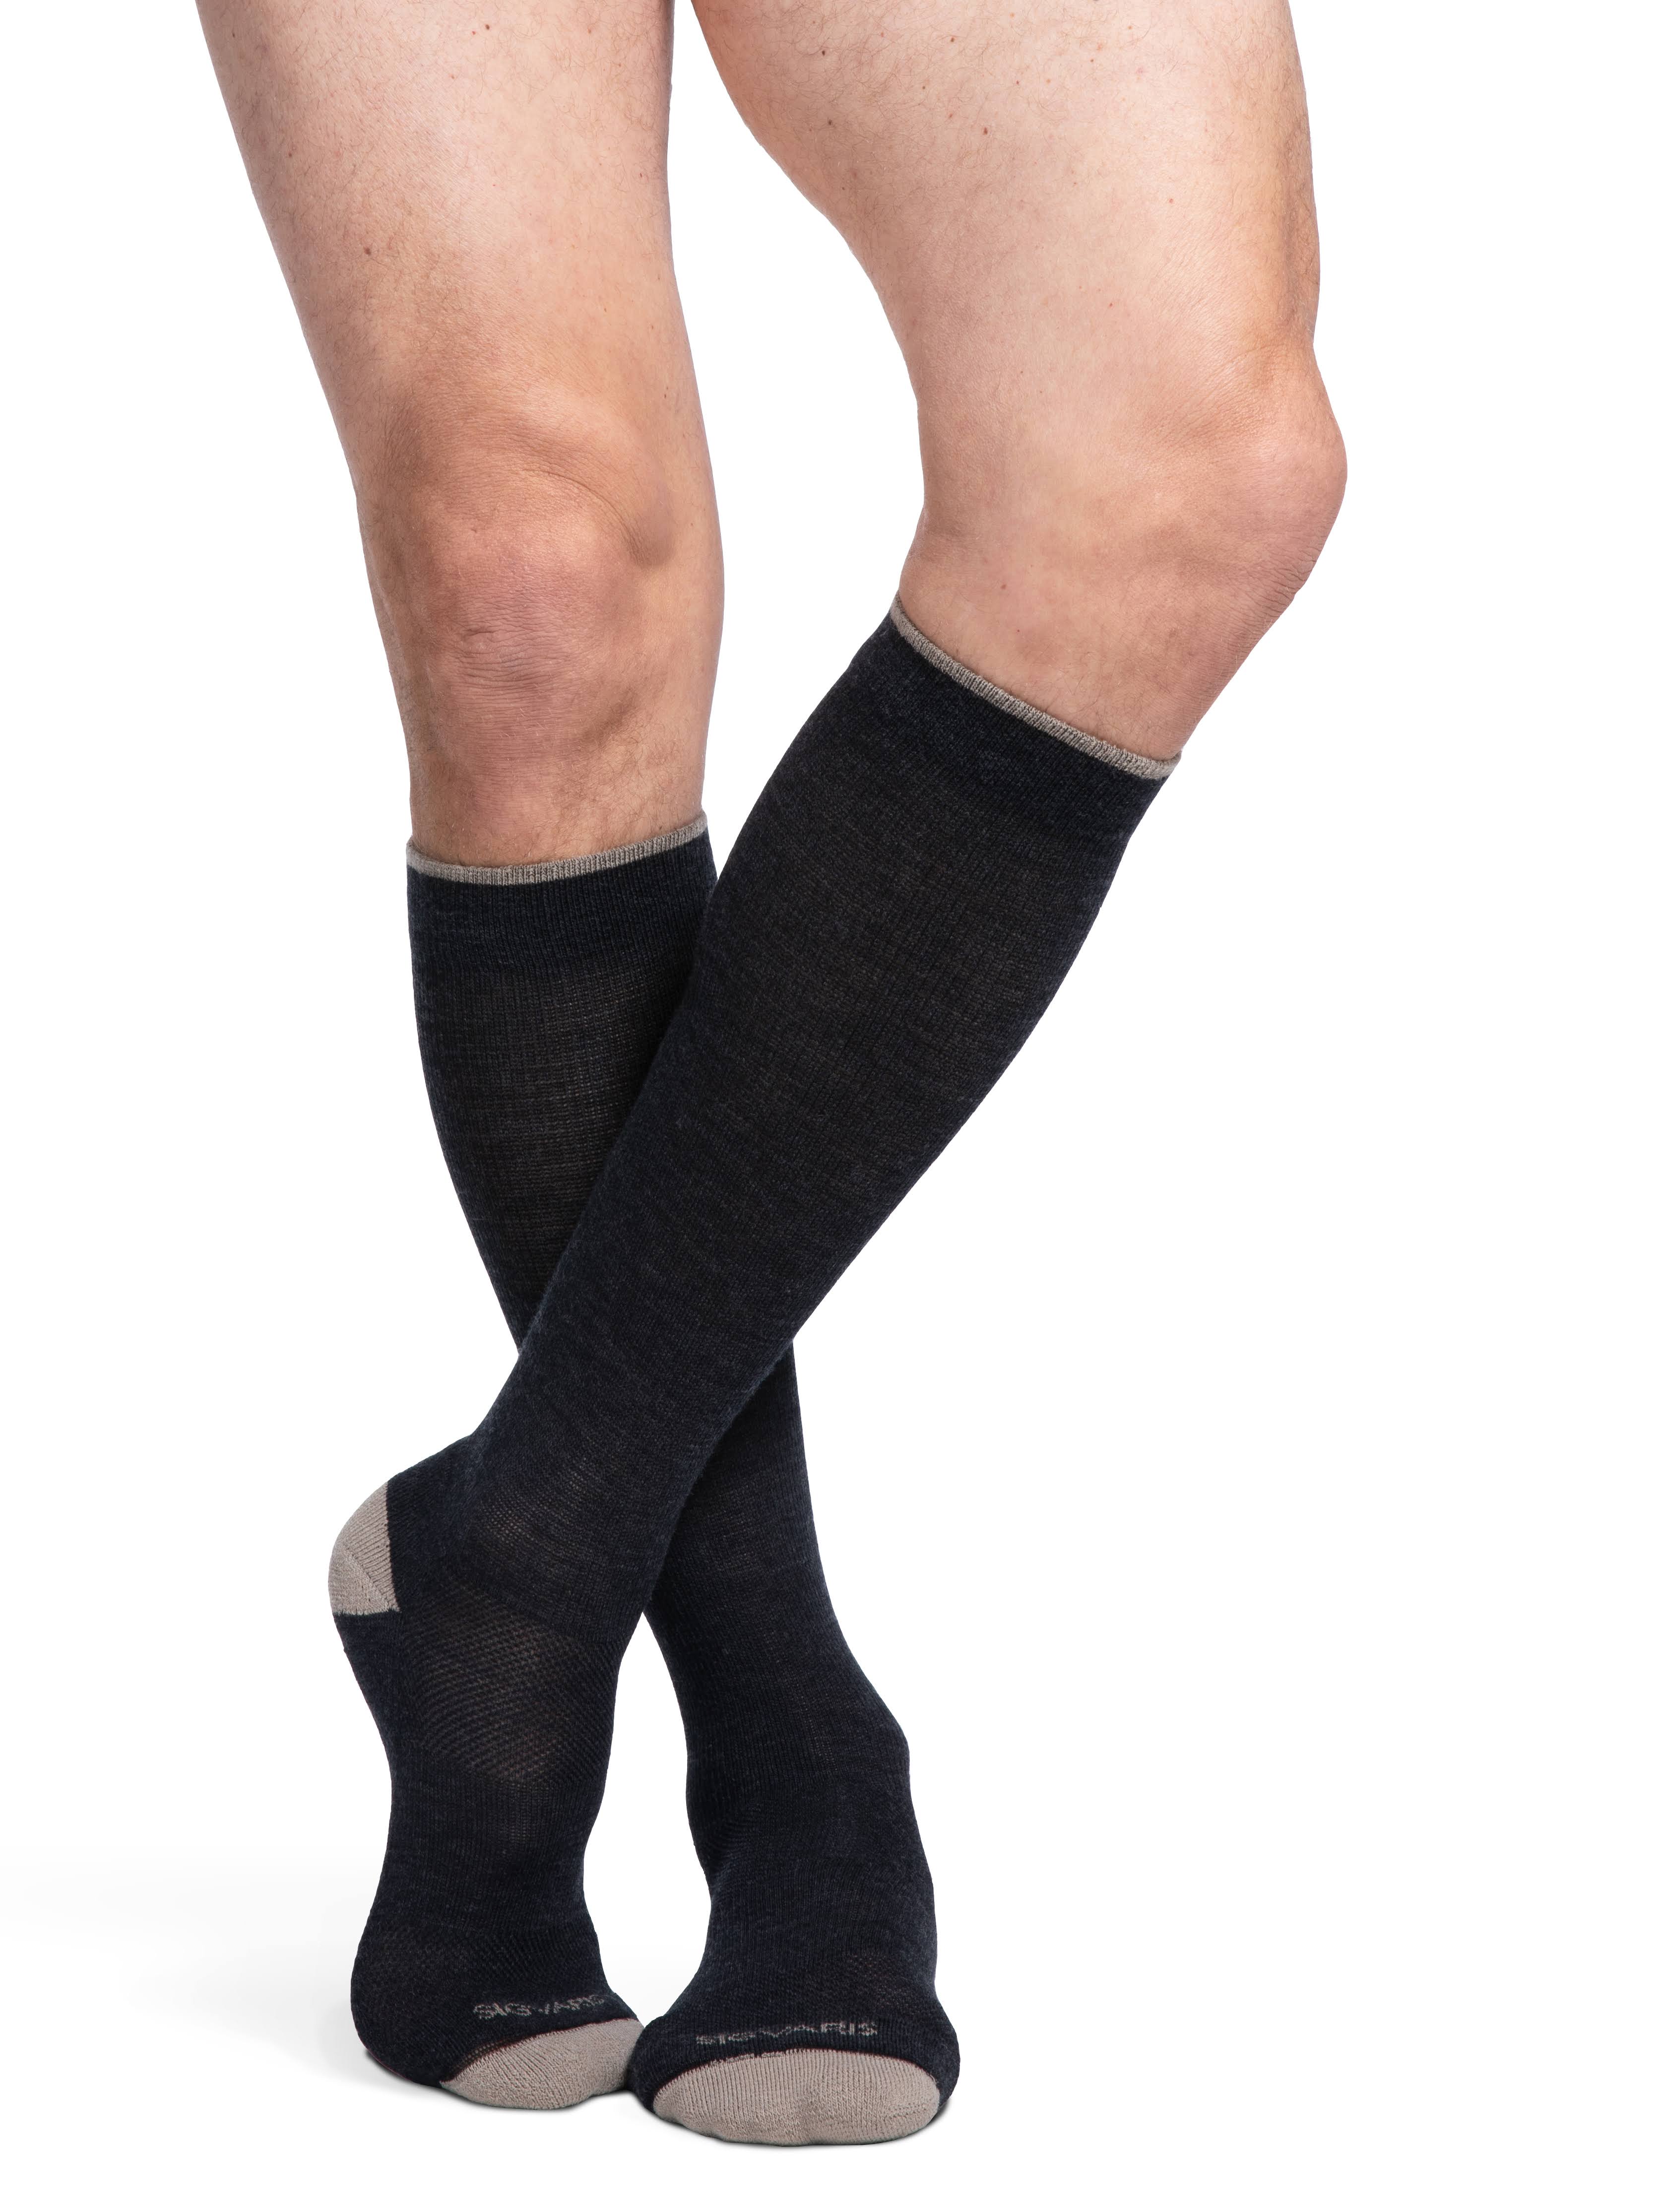 Sigvaris 422 Merino Outdoor Performance Wool Knee High Socks - 20 to 30mmhg, Black